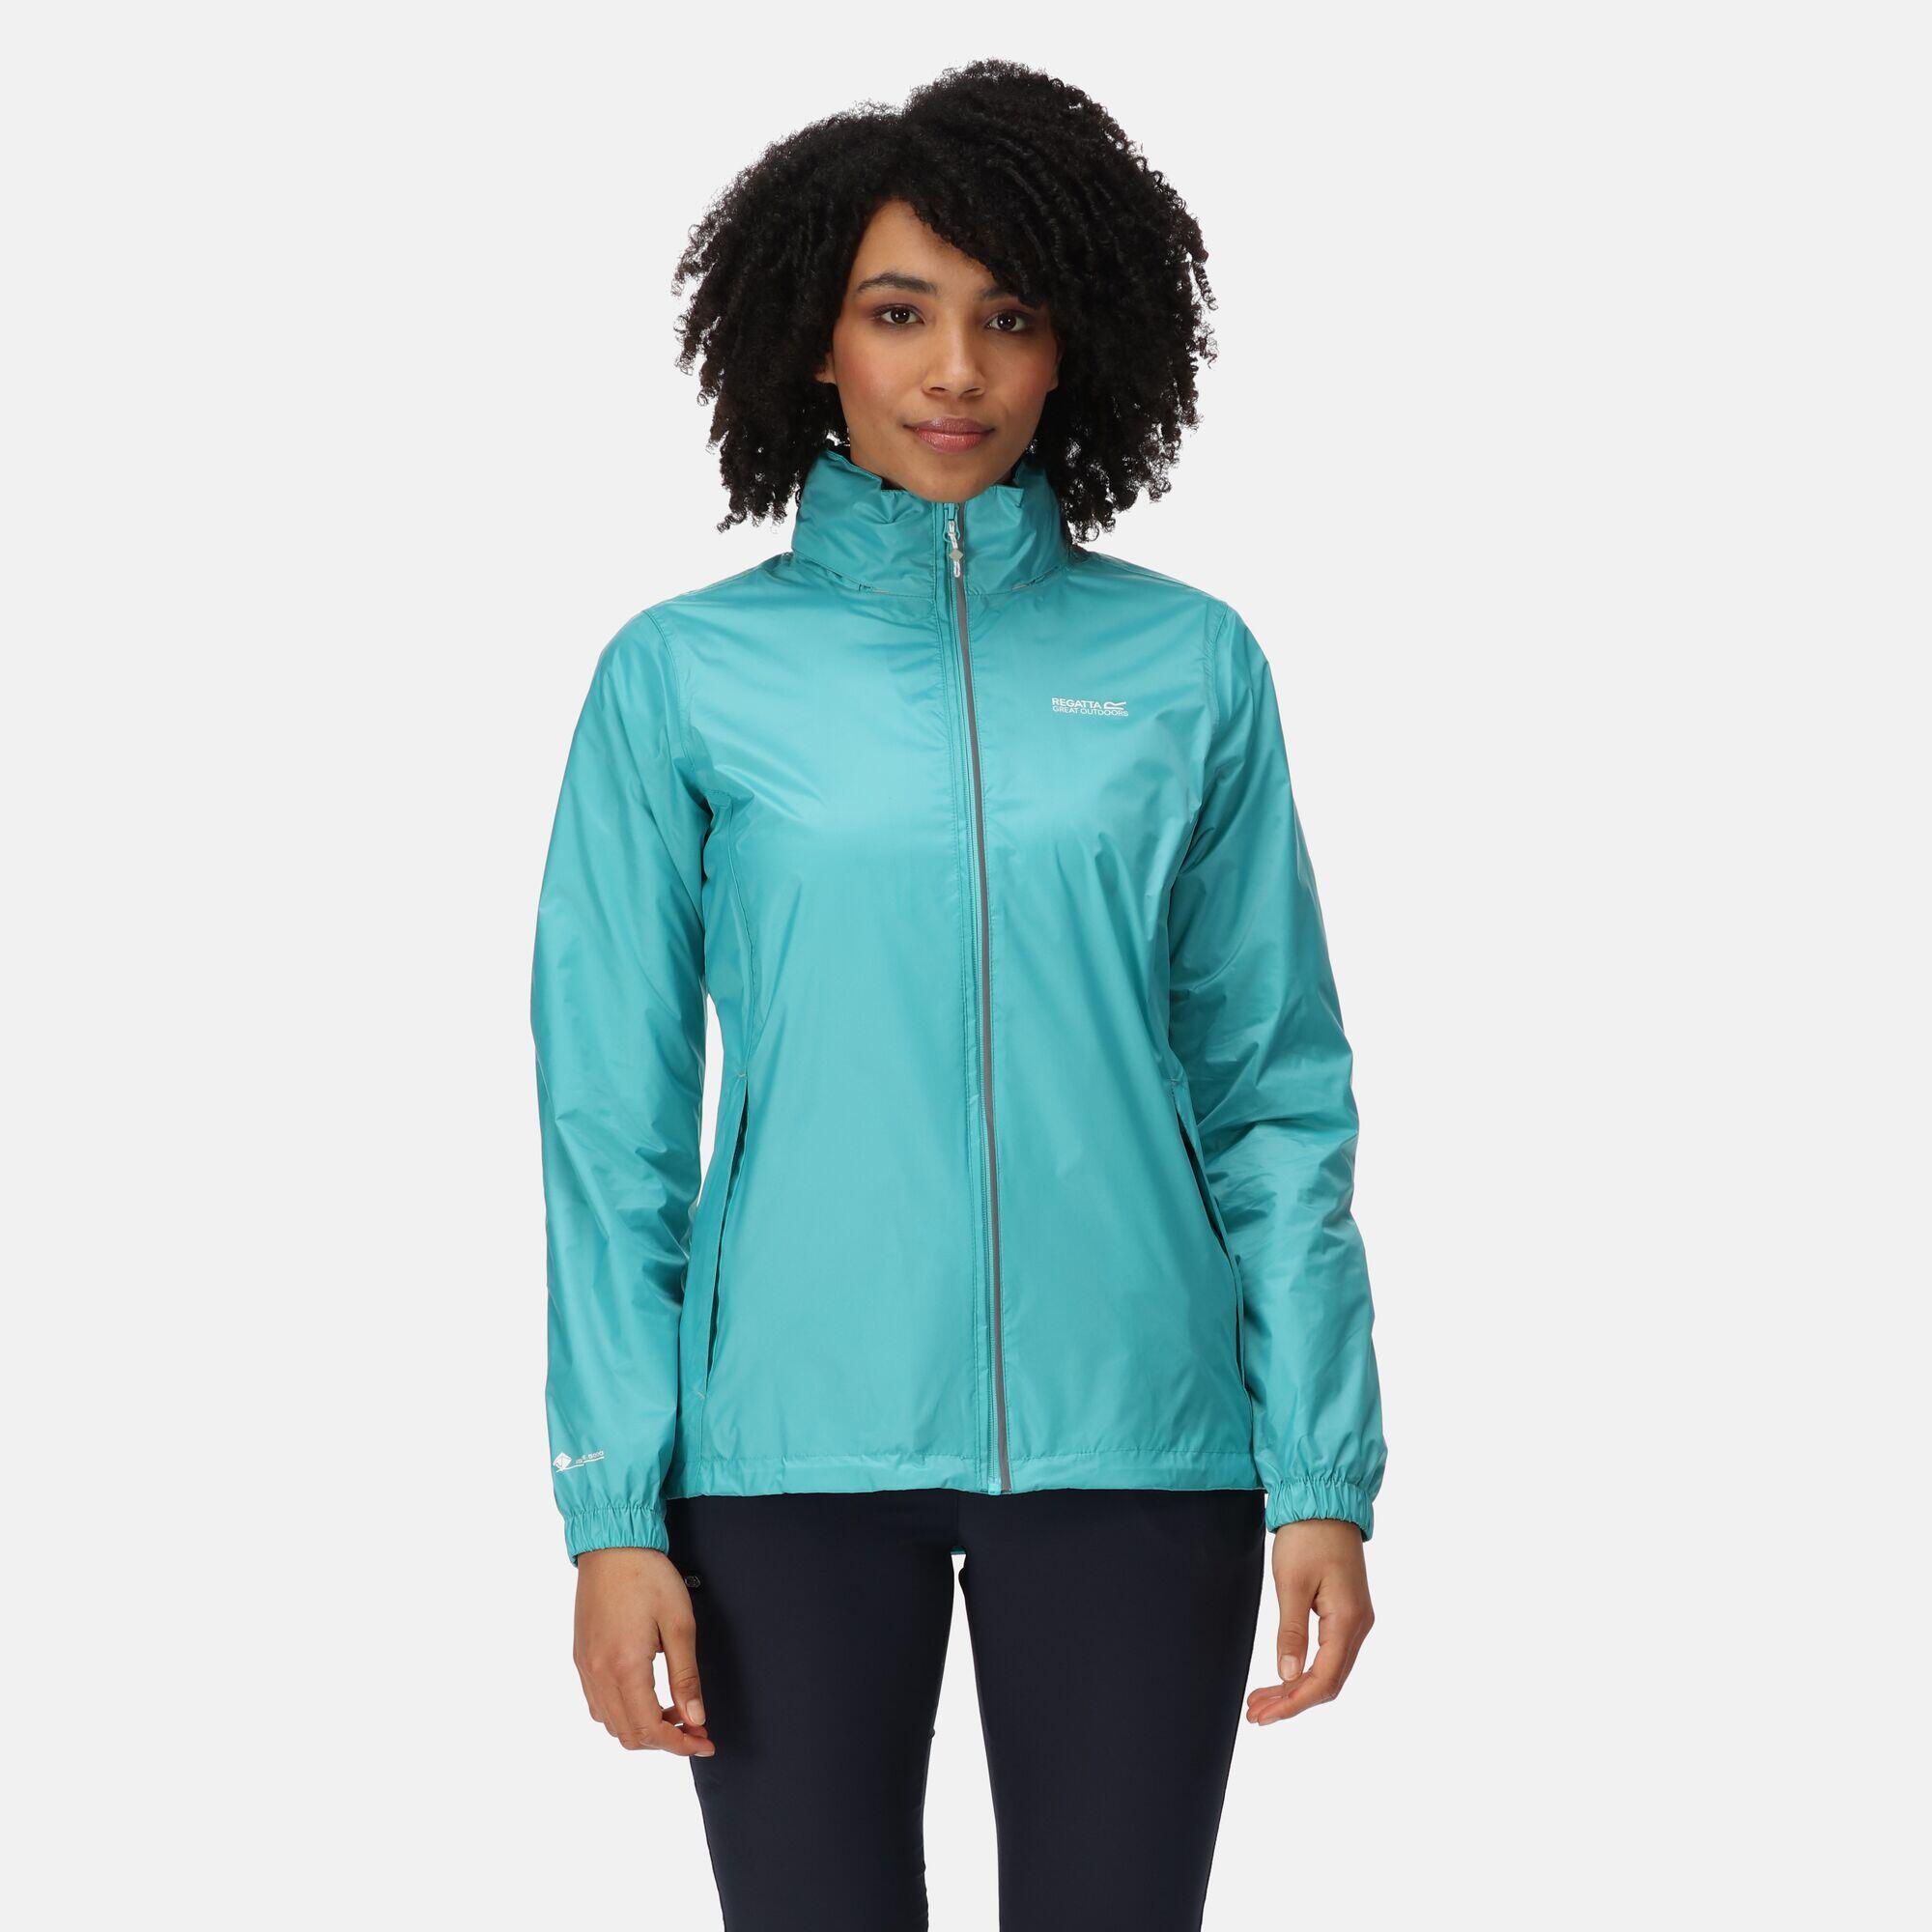 REGATTA Corinne IV Women's Fitness Waterproof Rain Jacket - Turquoise